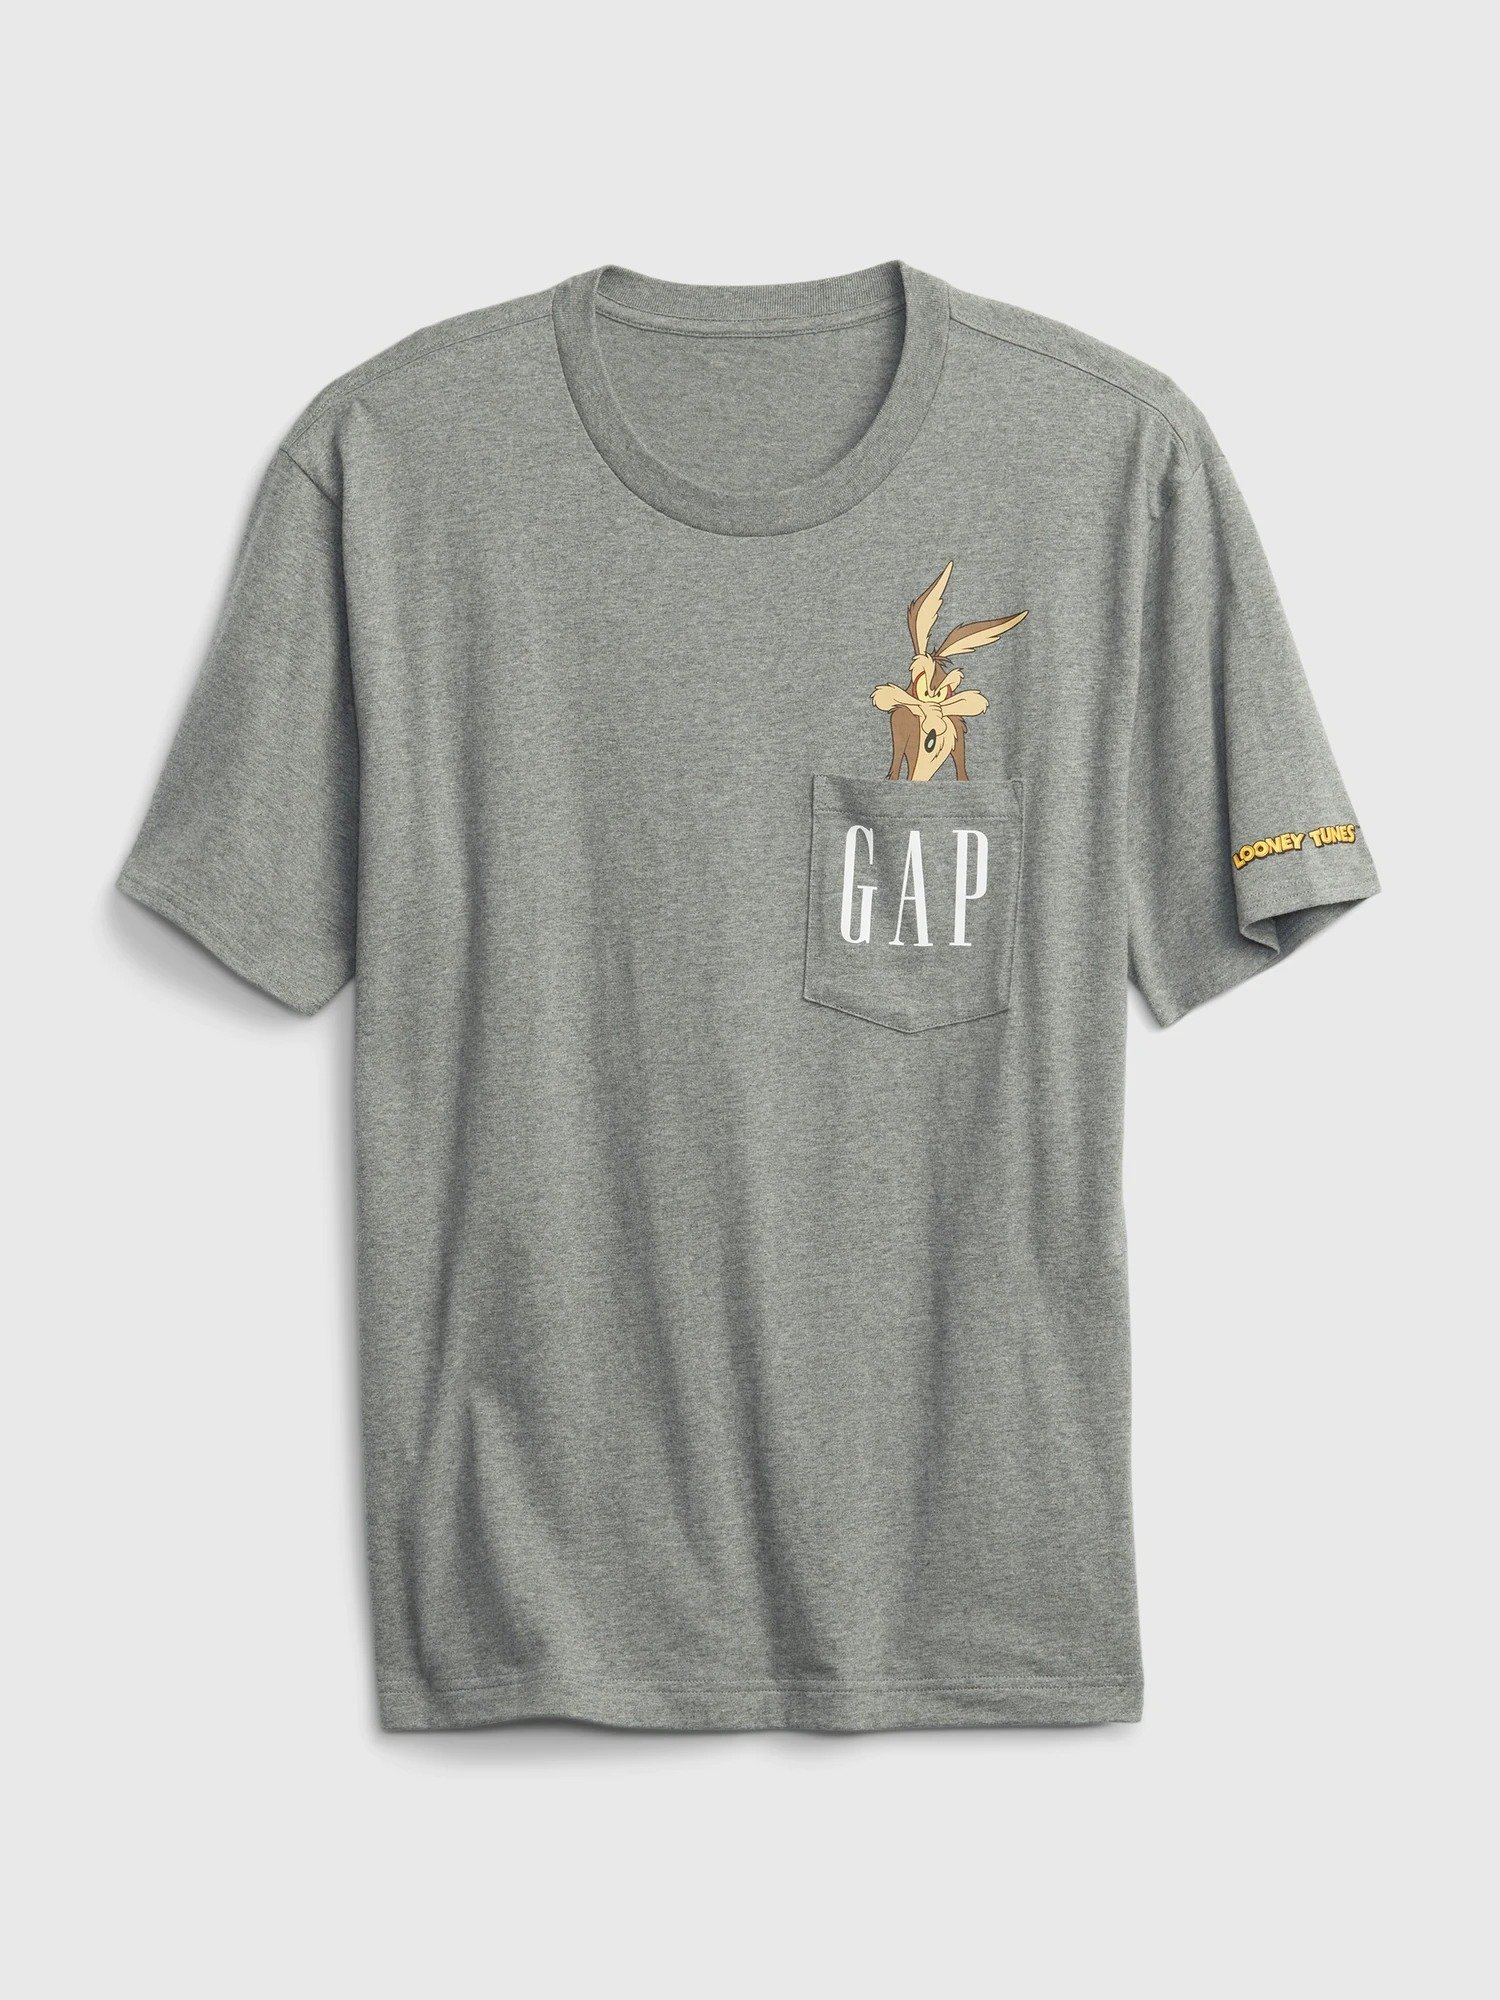 Gap x WB™ Looney Tunes Grafik Baskılı T-Shirt product image